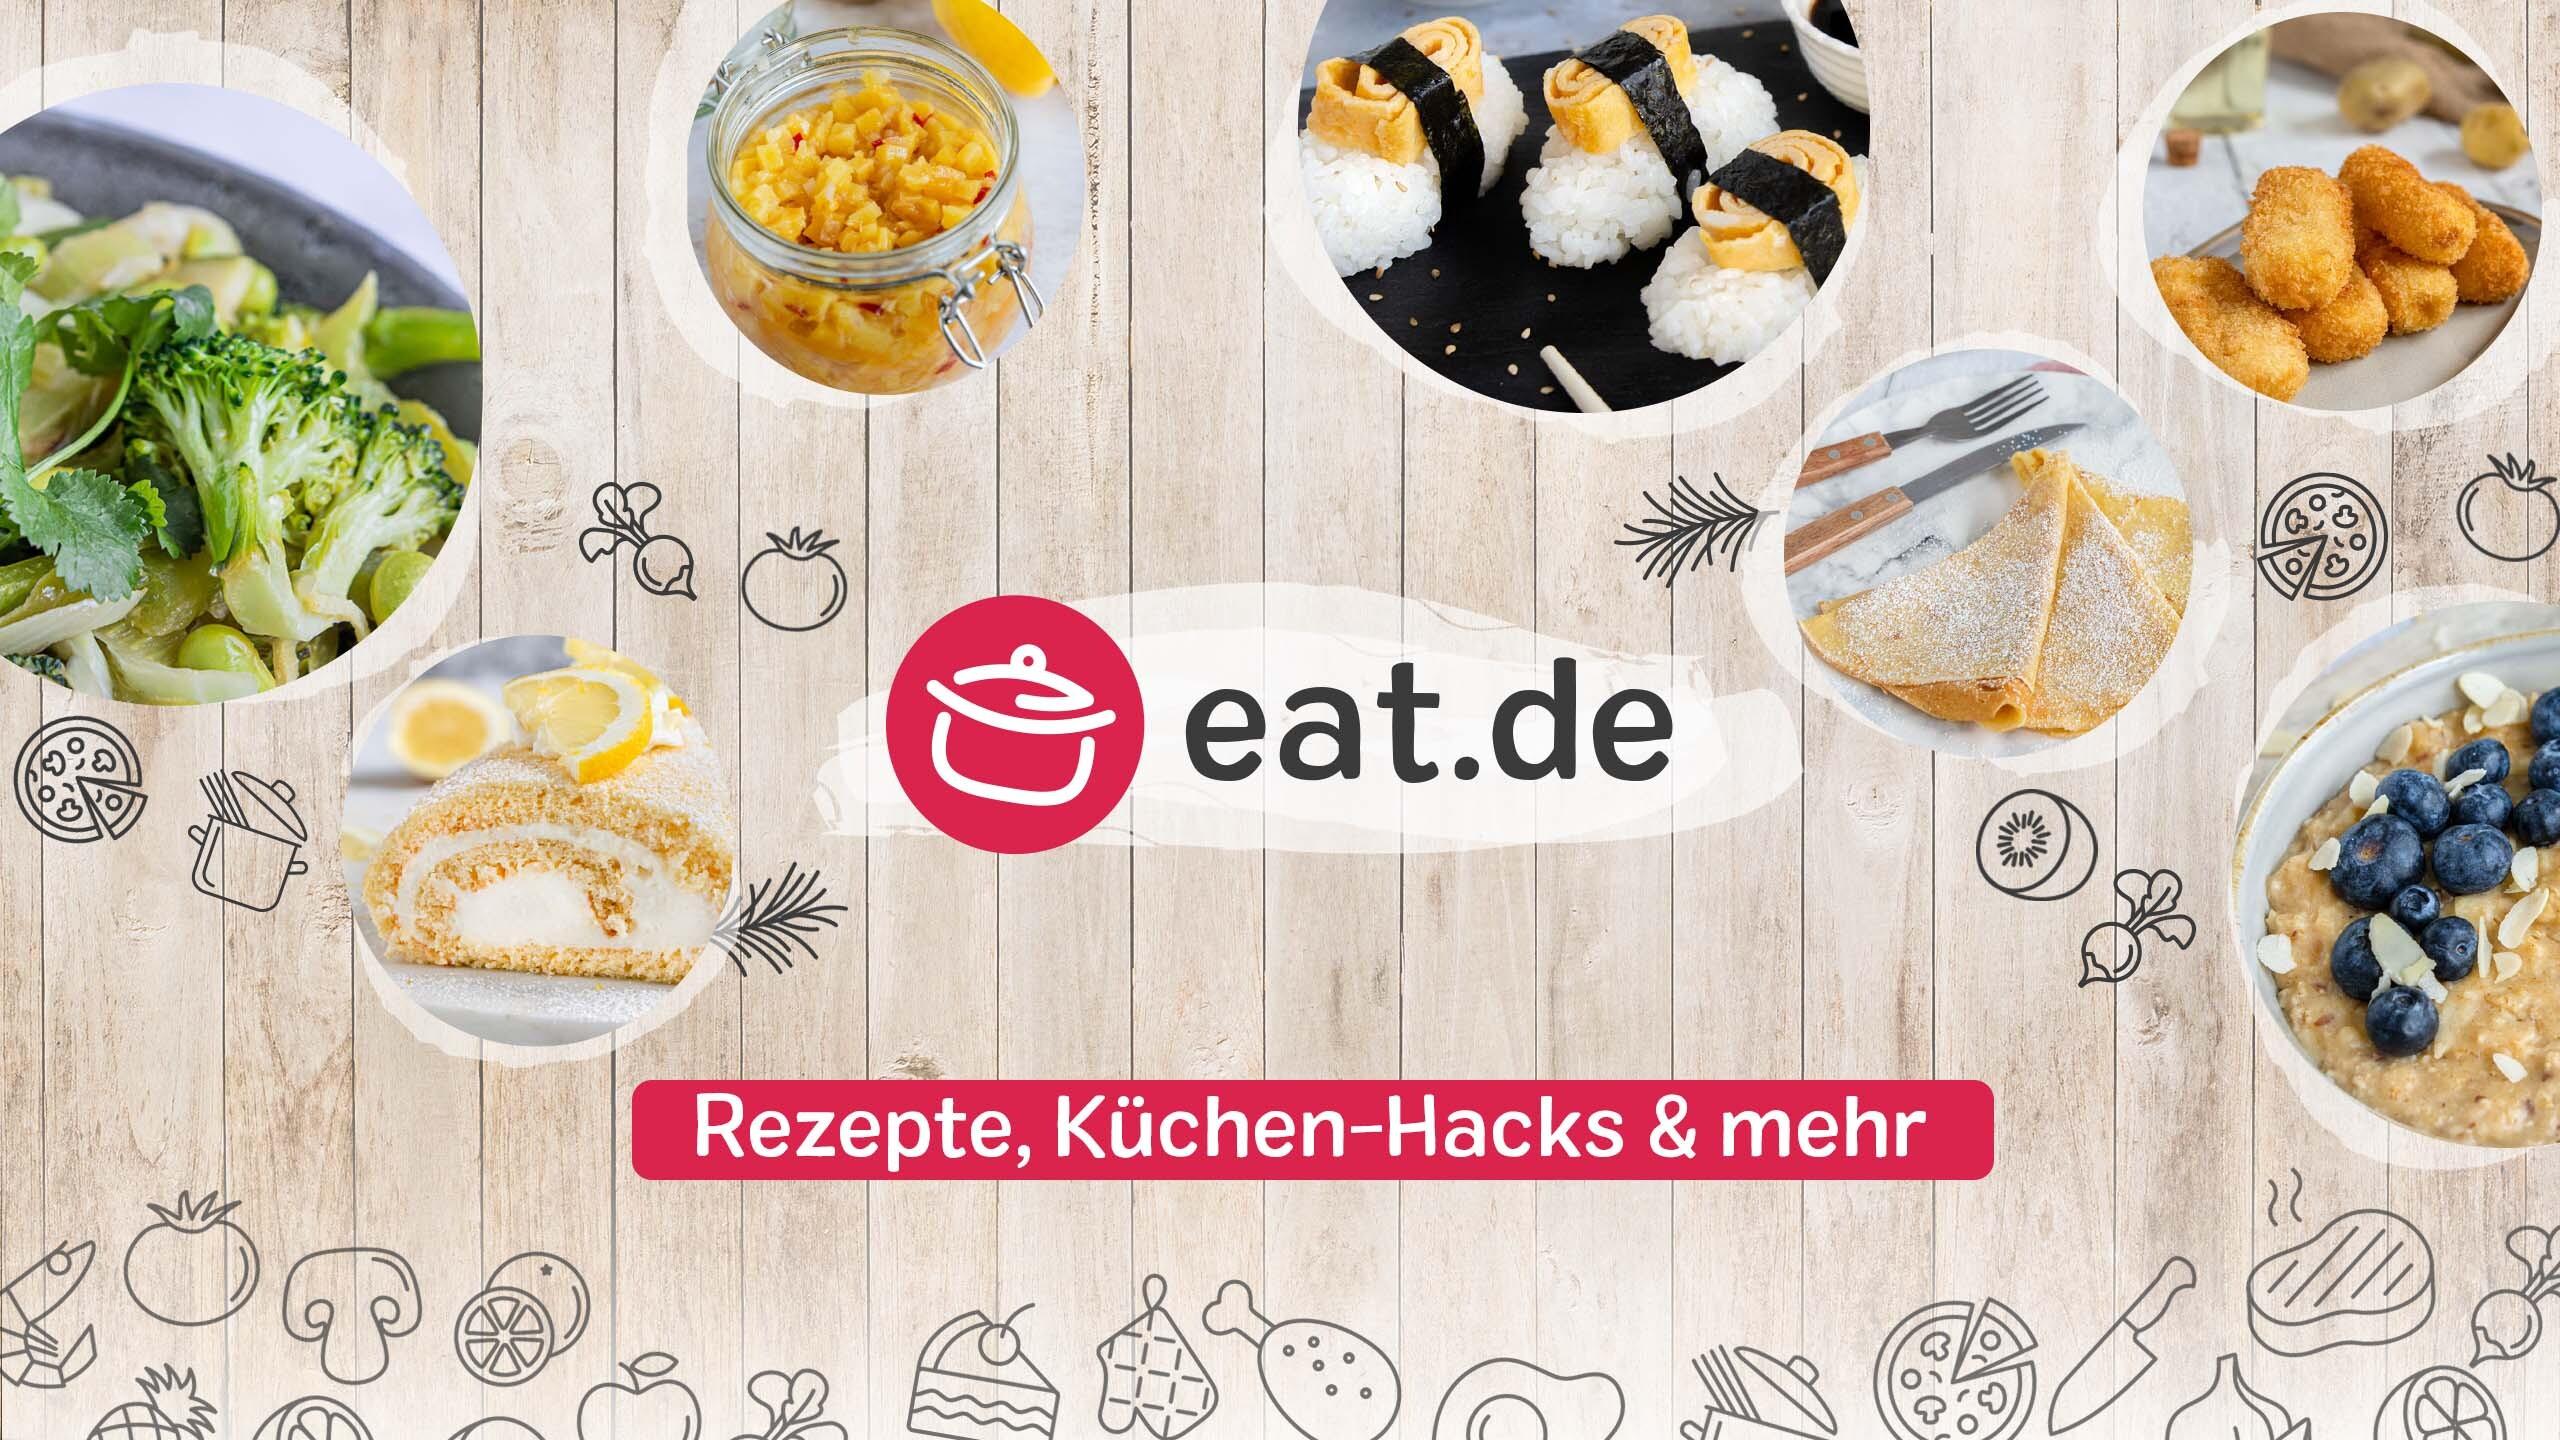 eat.de / startup from Zwickau / Background